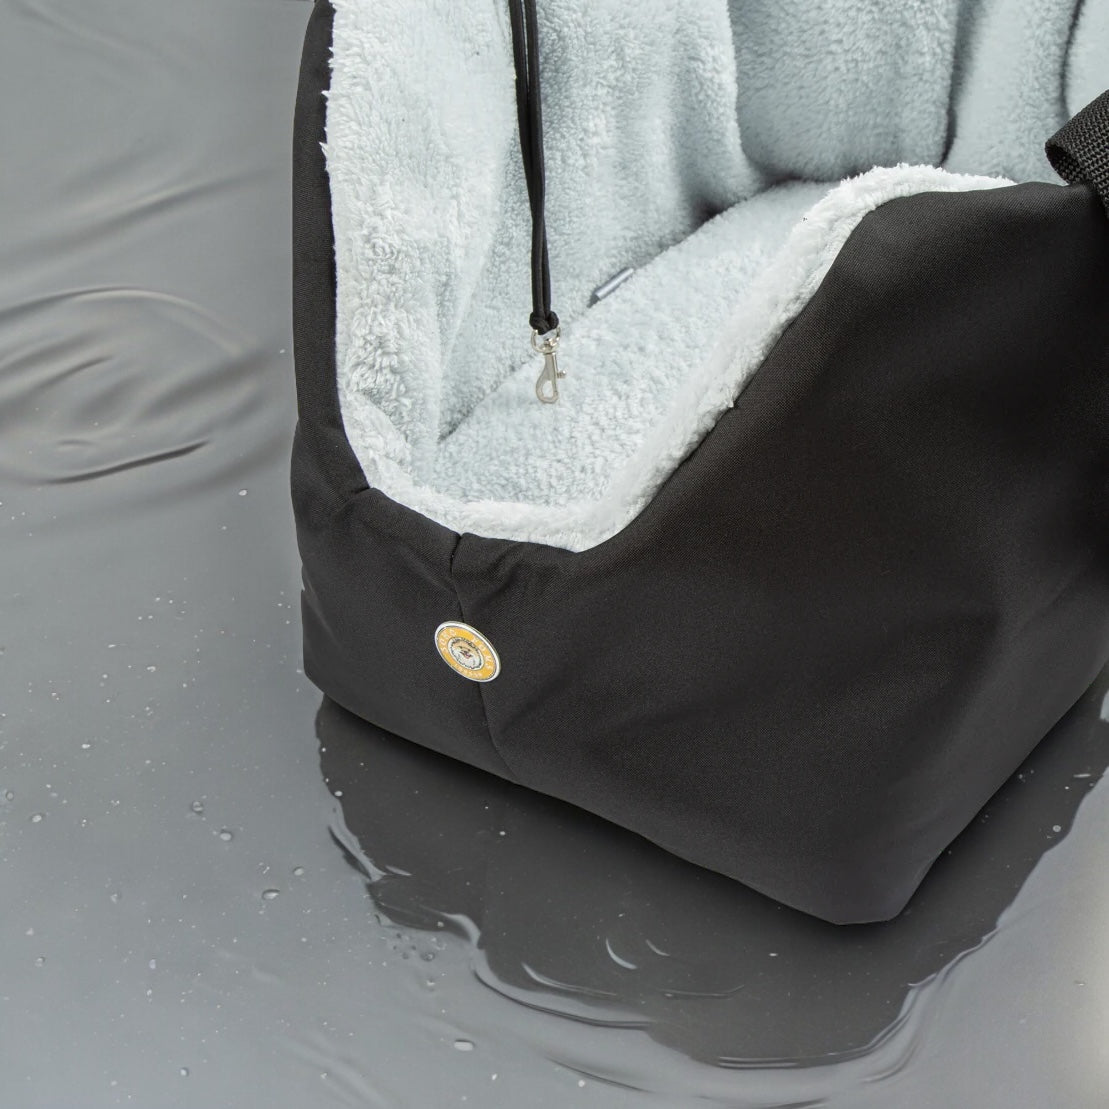 Rainy Bear Black & Light Blue Dog Carrier Bag with Zipper by SohoPoms